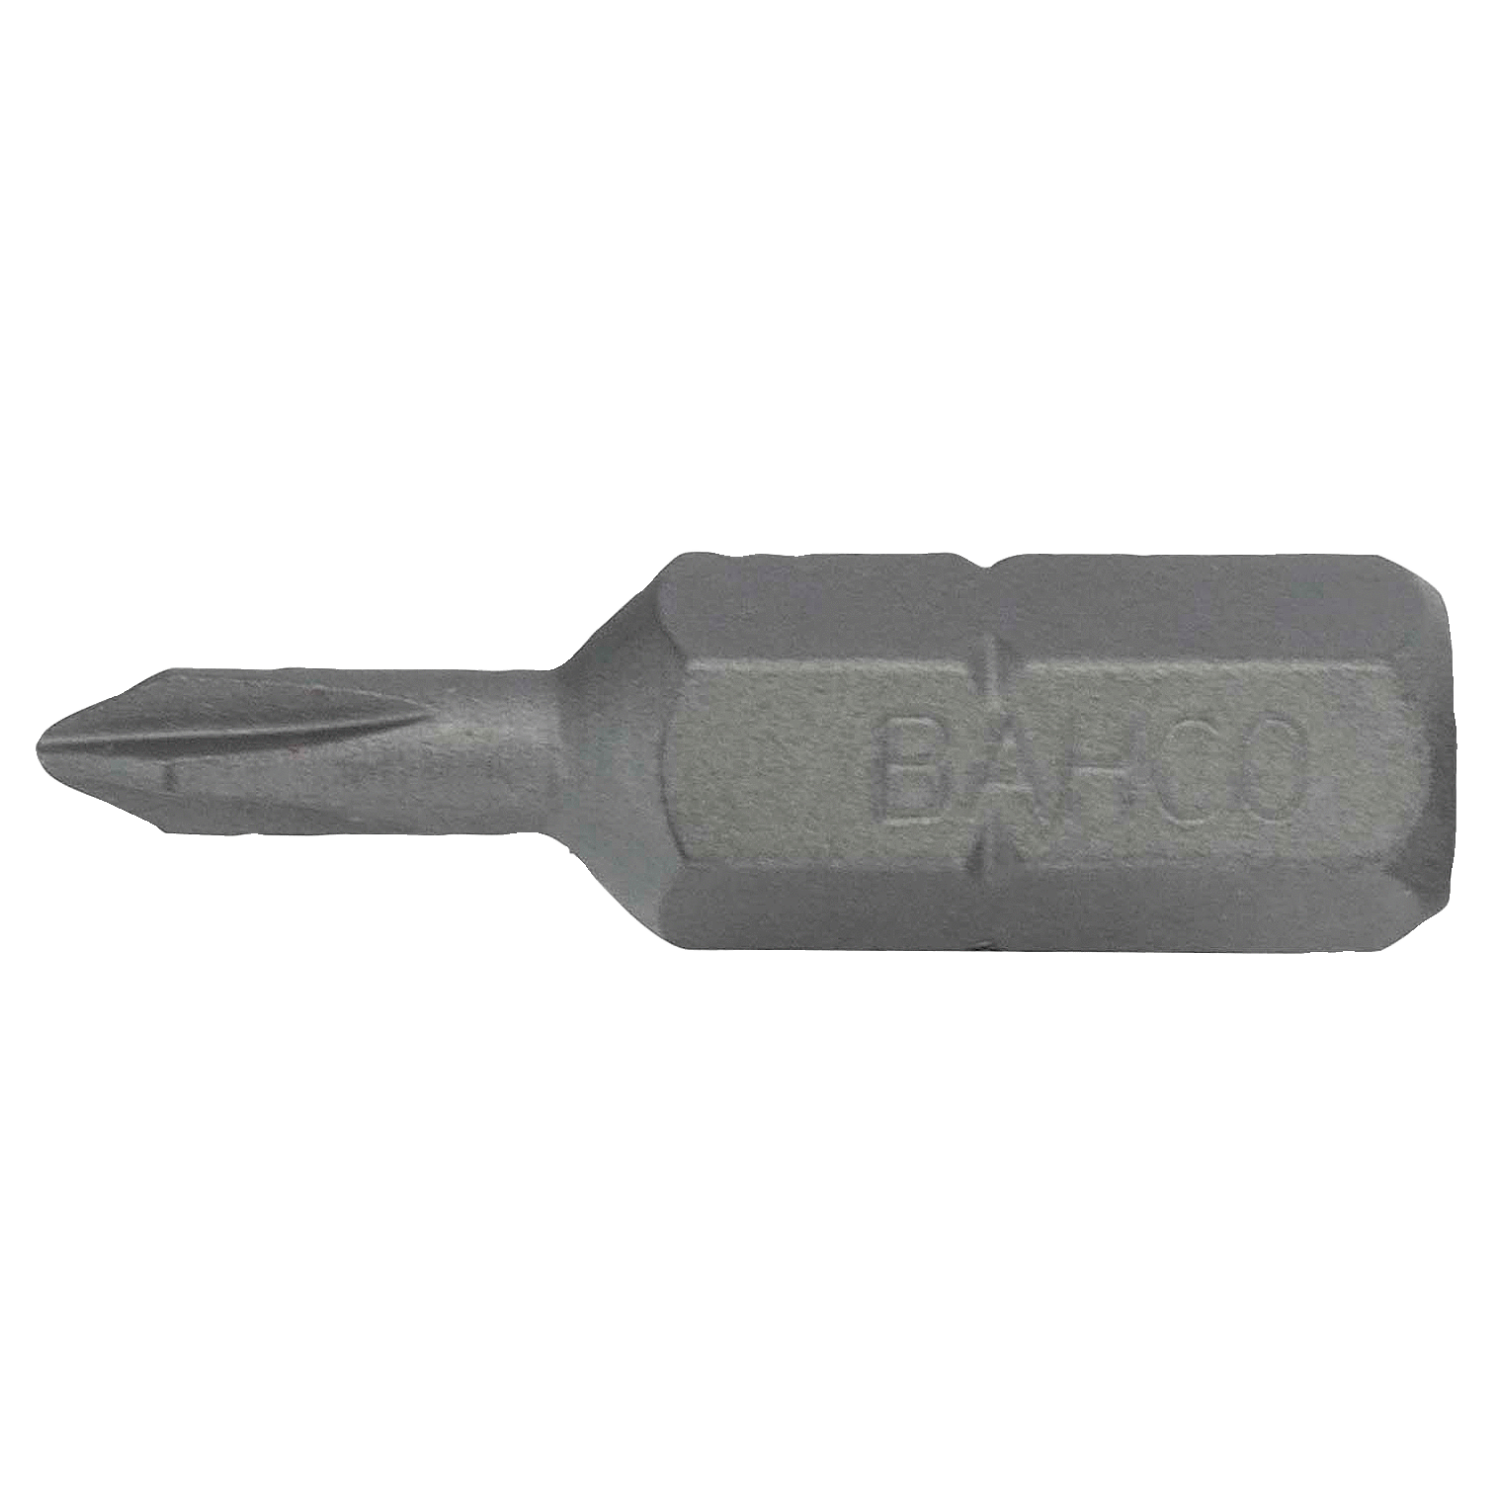 BAHCO 59S/PH 1/4" Standard Screwdriver Bit - Premium Screwdriver Bit from BAHCO - Shop now at Yew Aik.